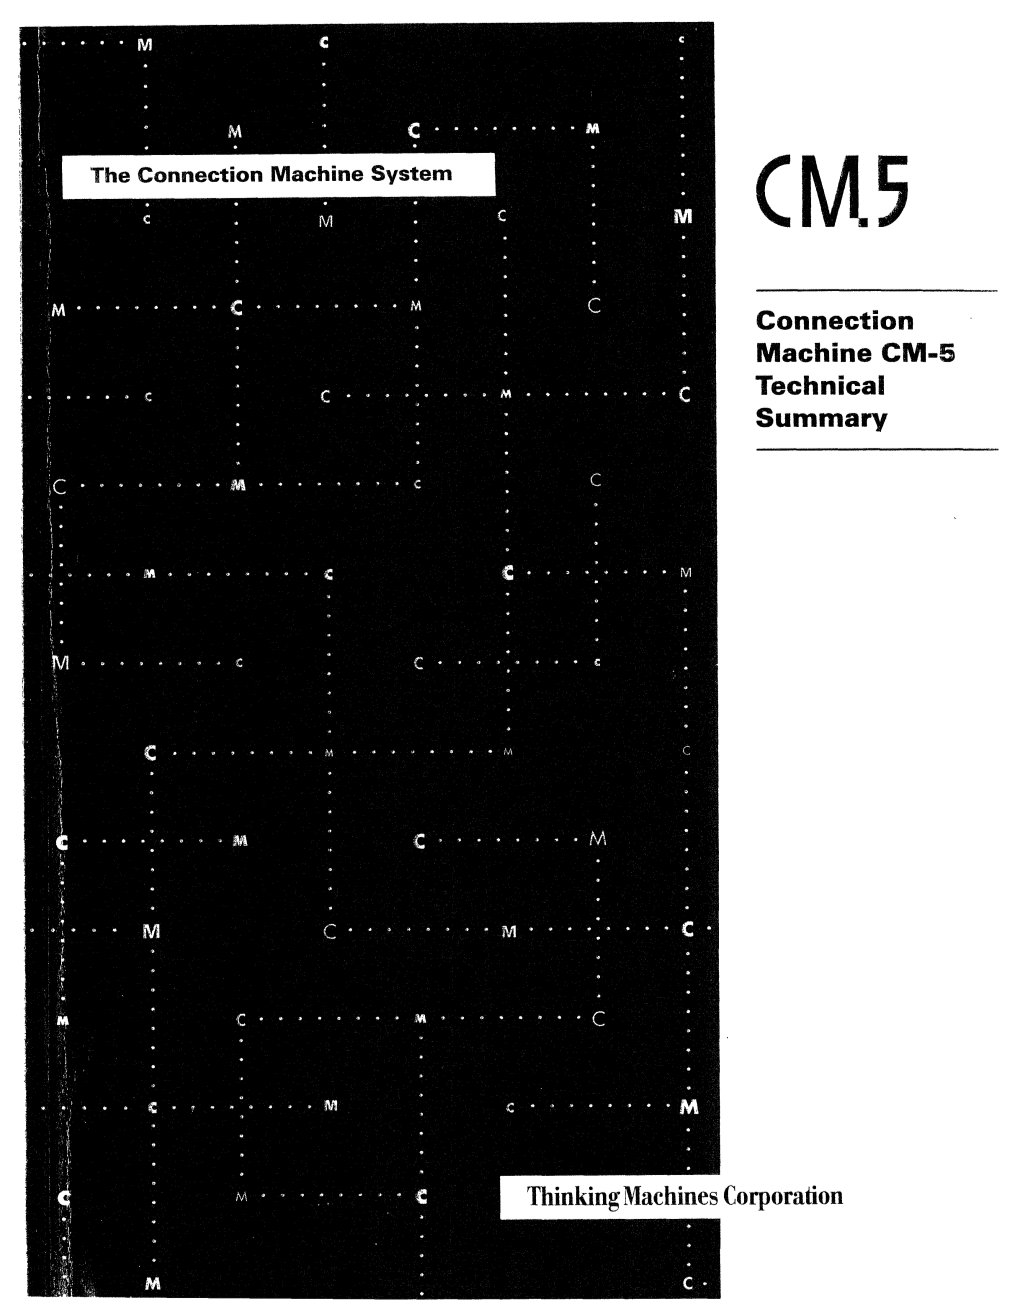 Machine CM-5 Technical Summary